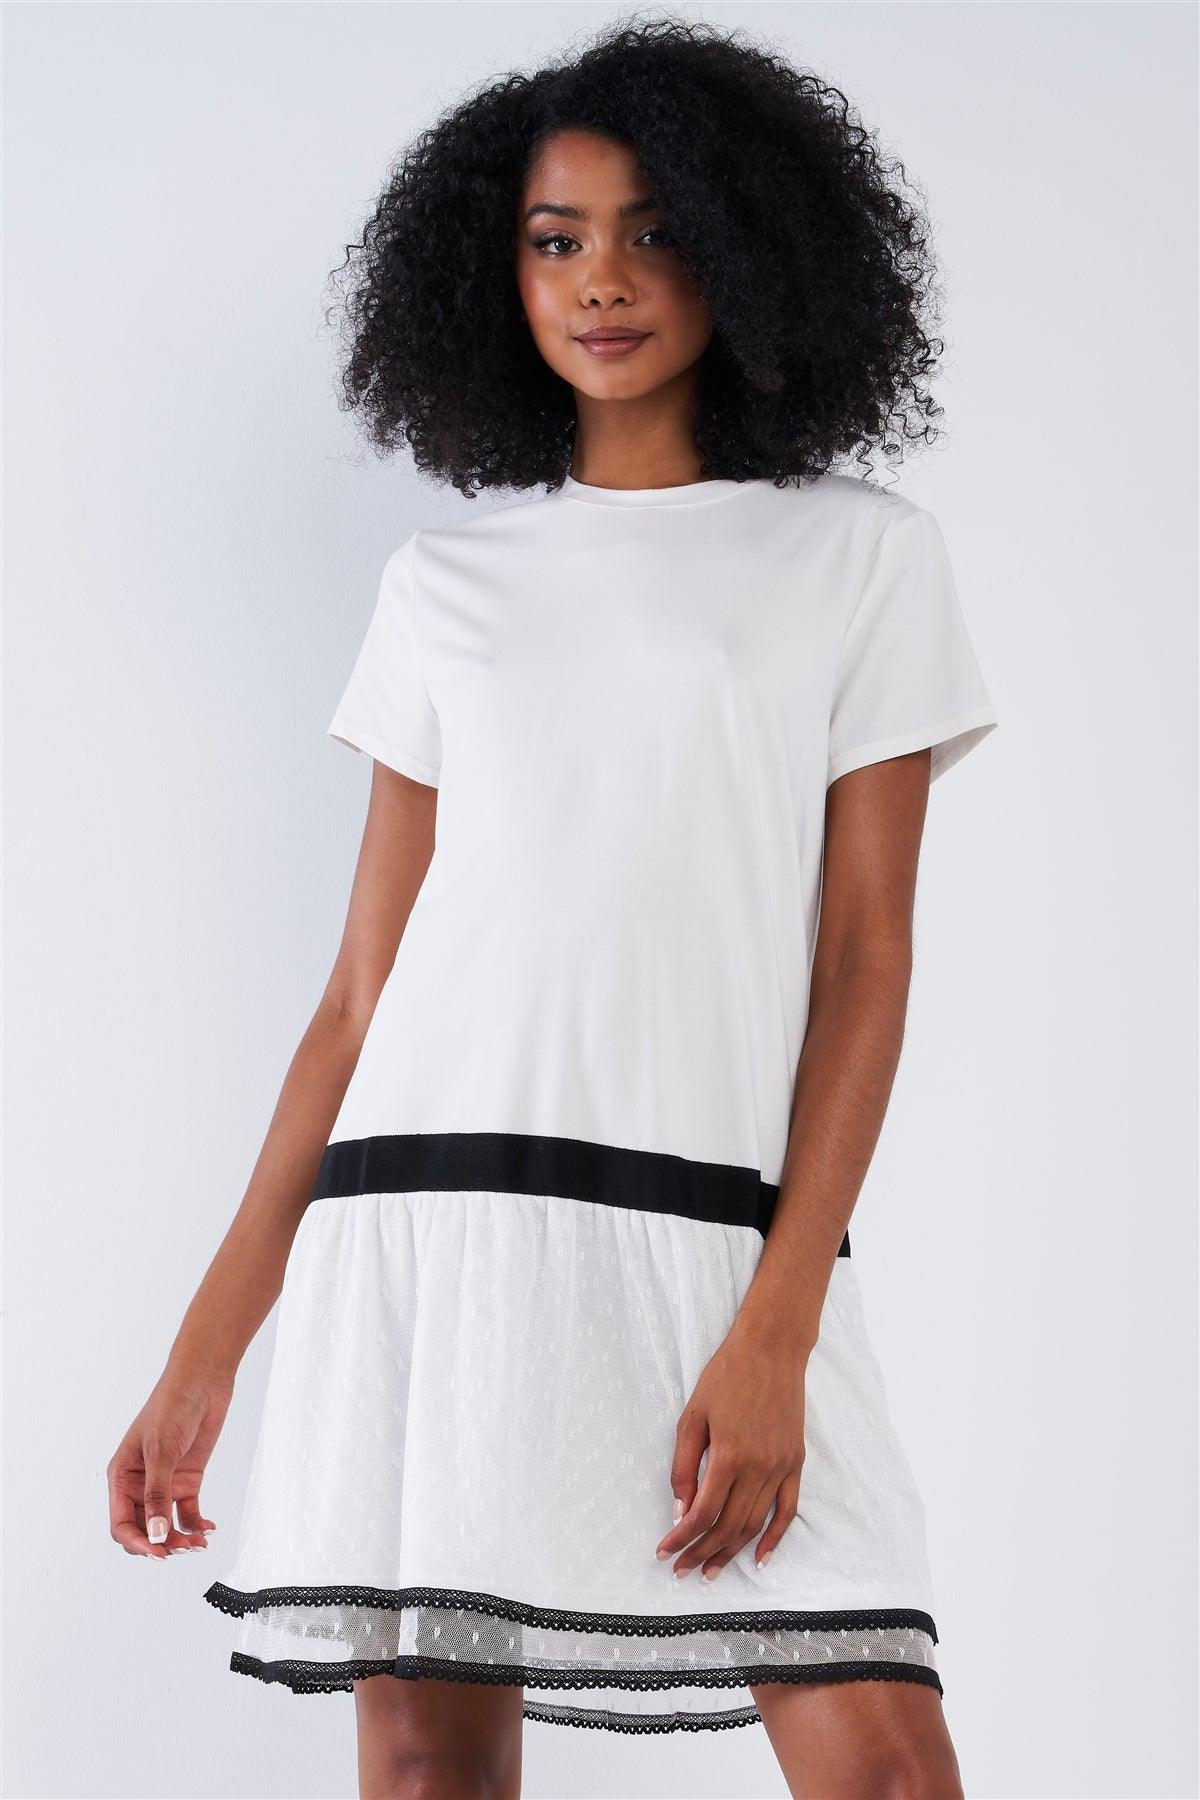 Off-White Black Detail Loose Shapeless Lined Double Mesh Bottom Layer Crew Neck Mini Sleeve T-Shirt Mini Dress